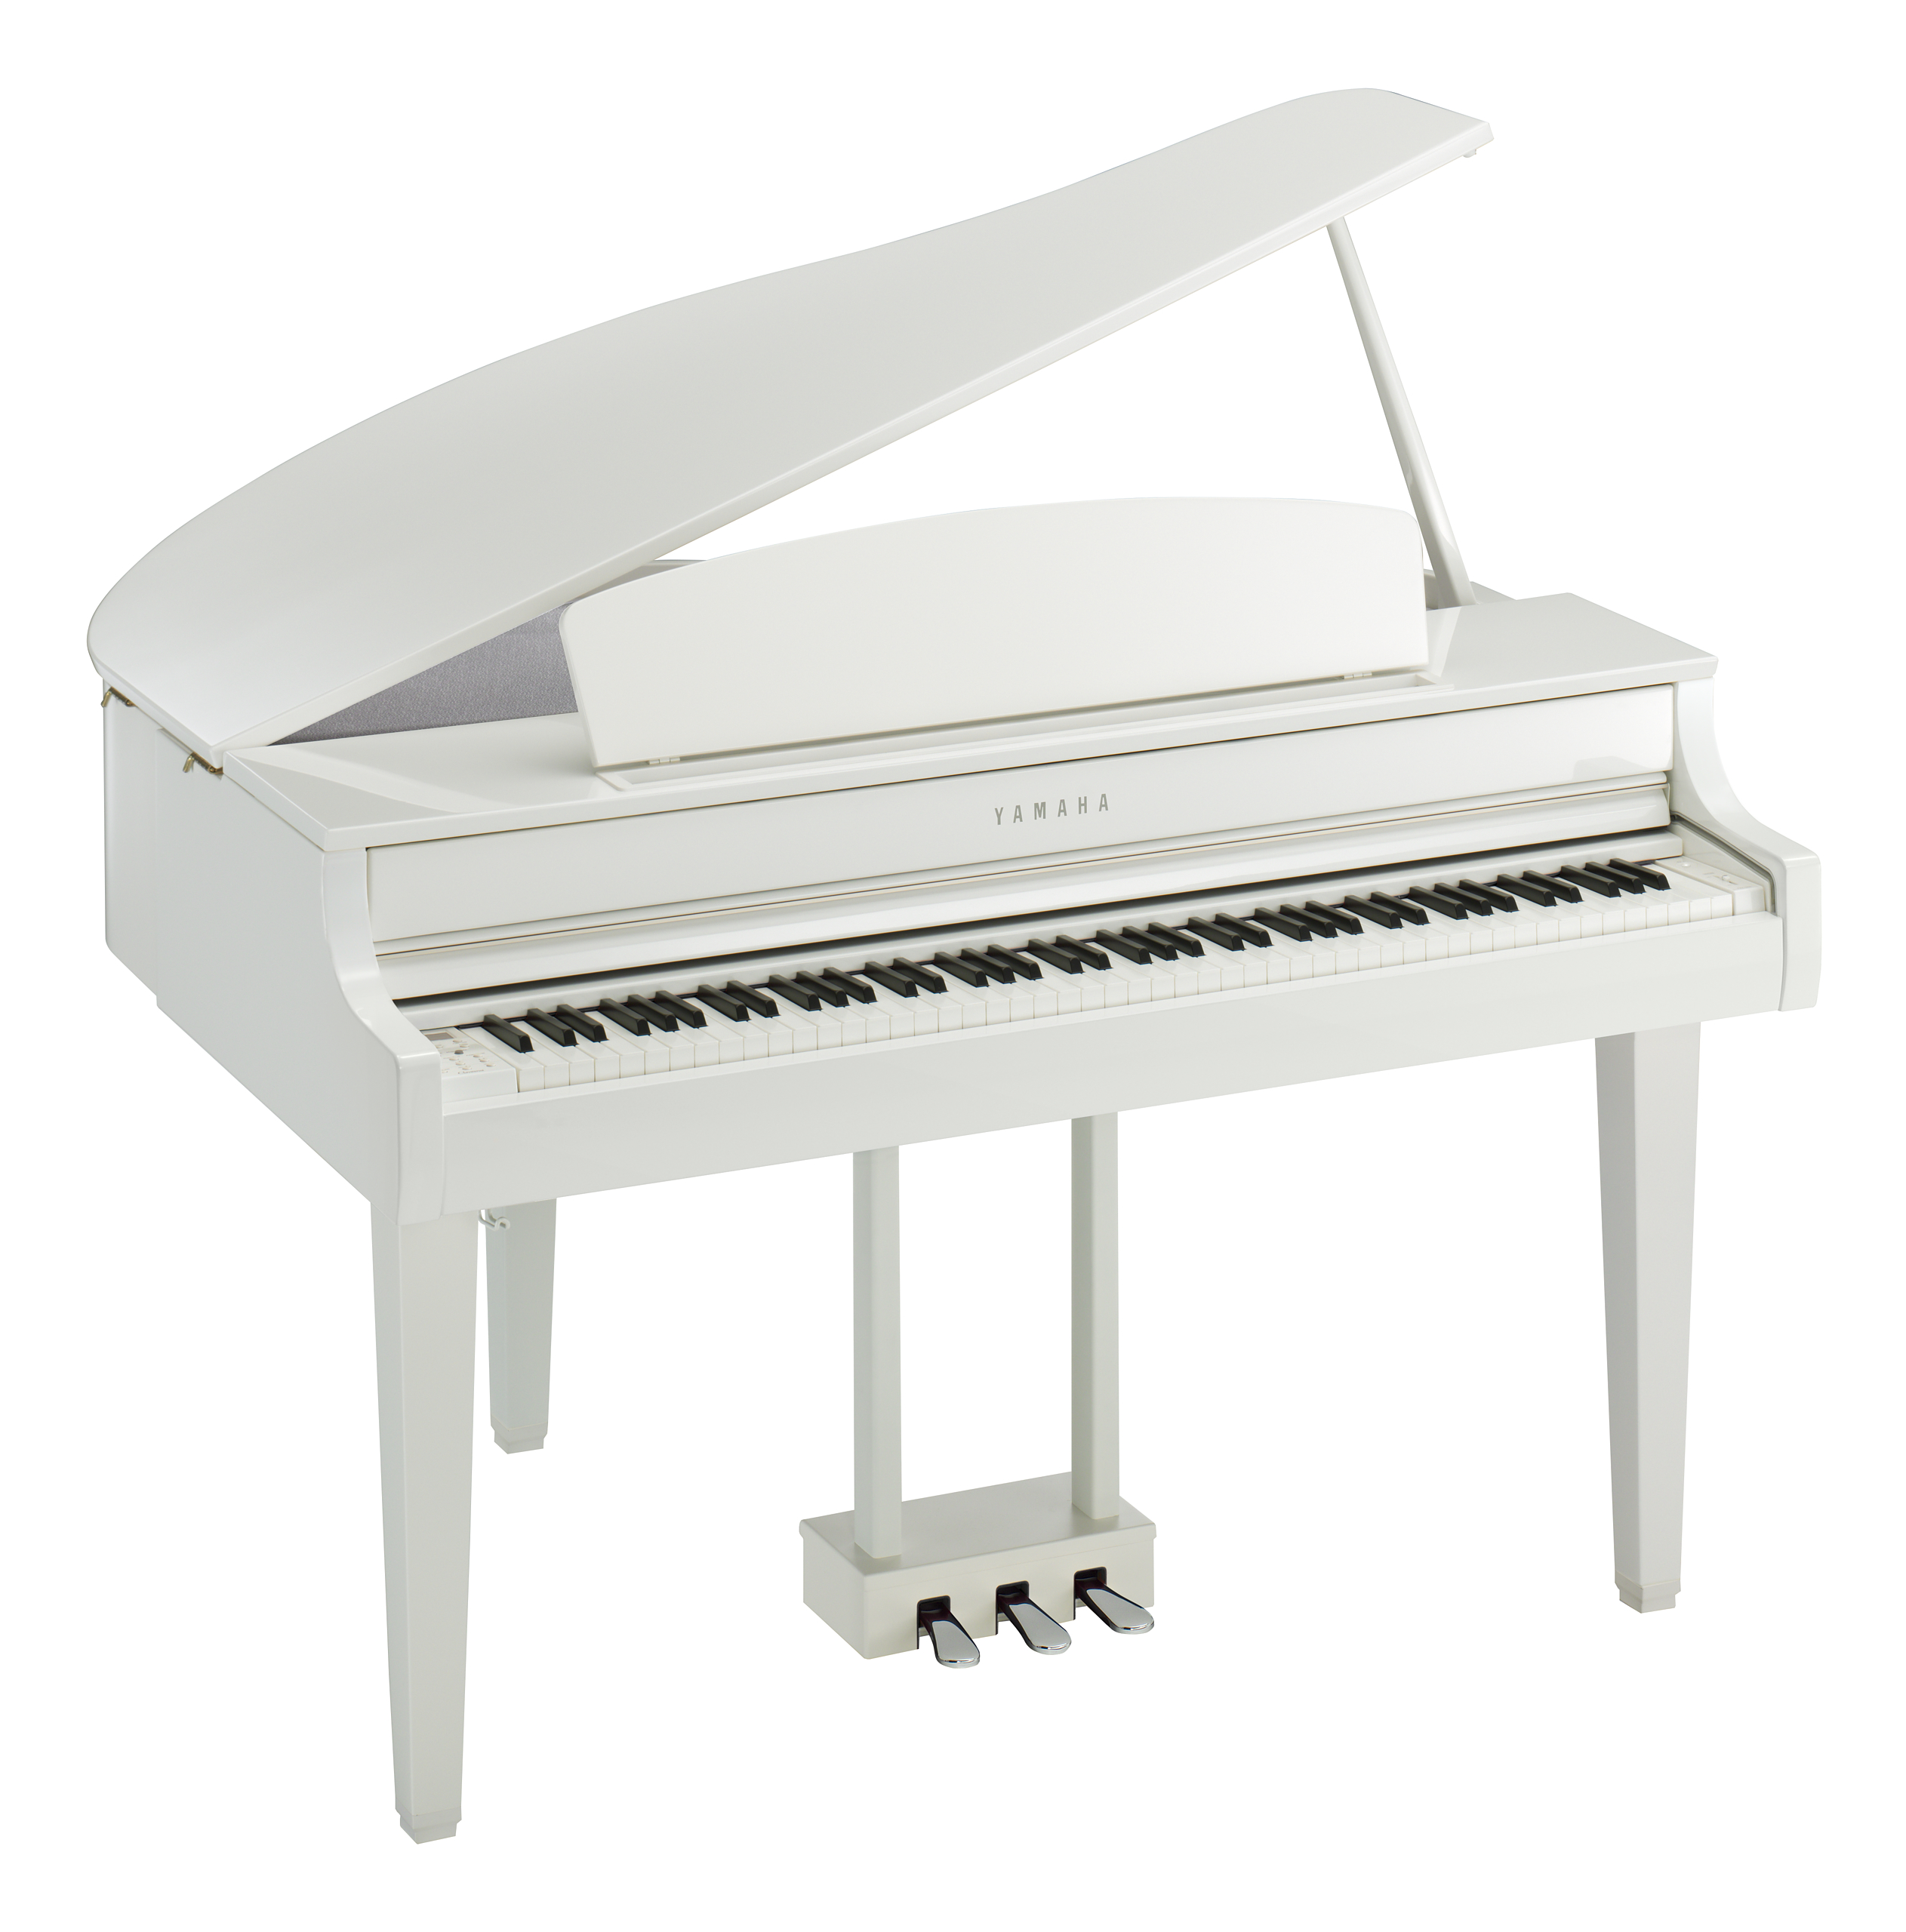 Yamaha Clp765gp Wh - Digitalpiano mit Stand - Variation 1